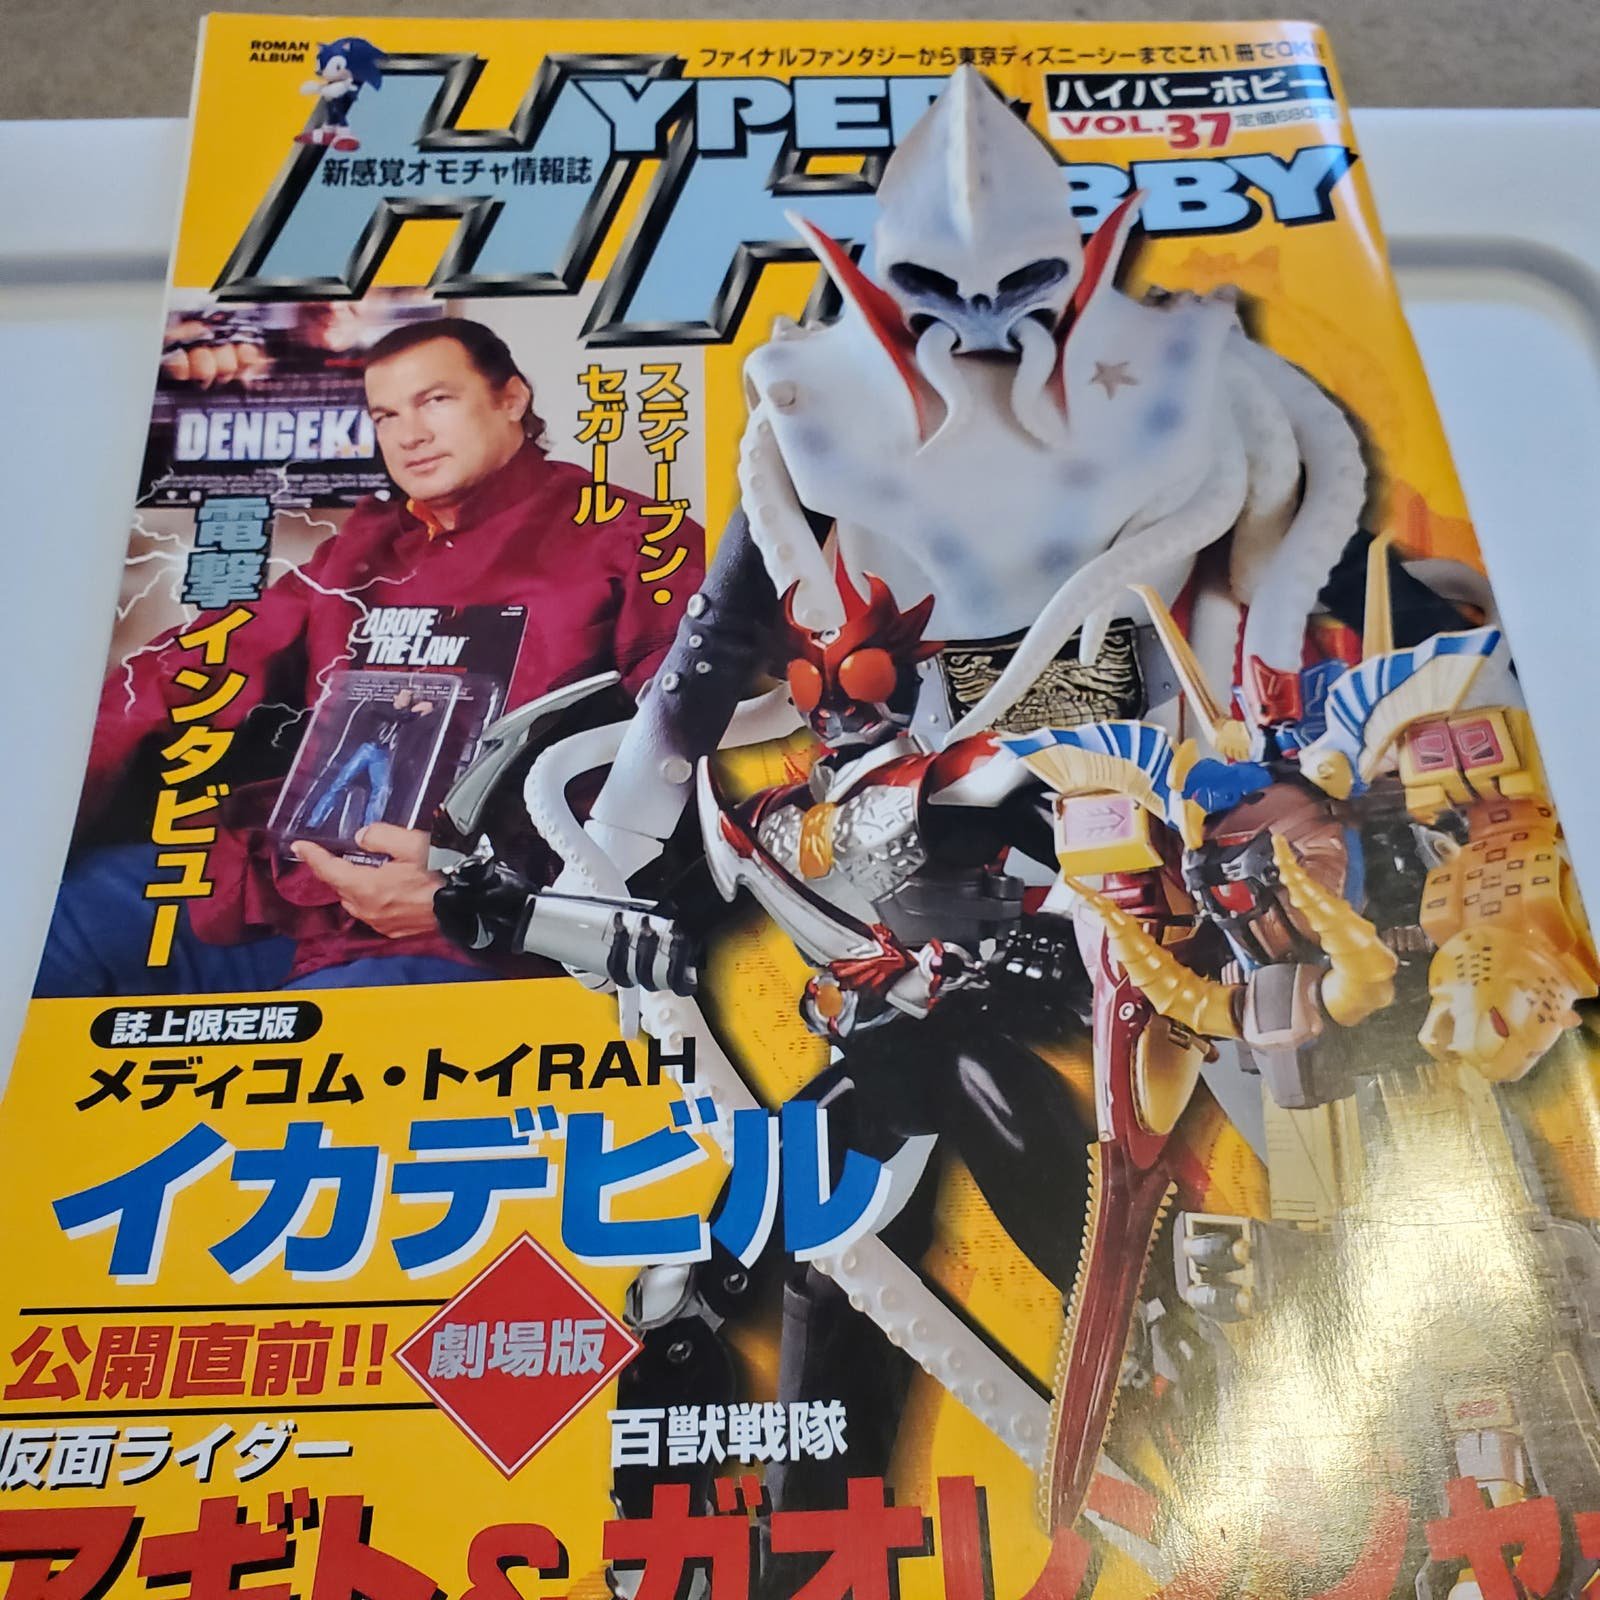 Hyper Hobby Vol 37 Magazine Star Wars Kamen Rider Power